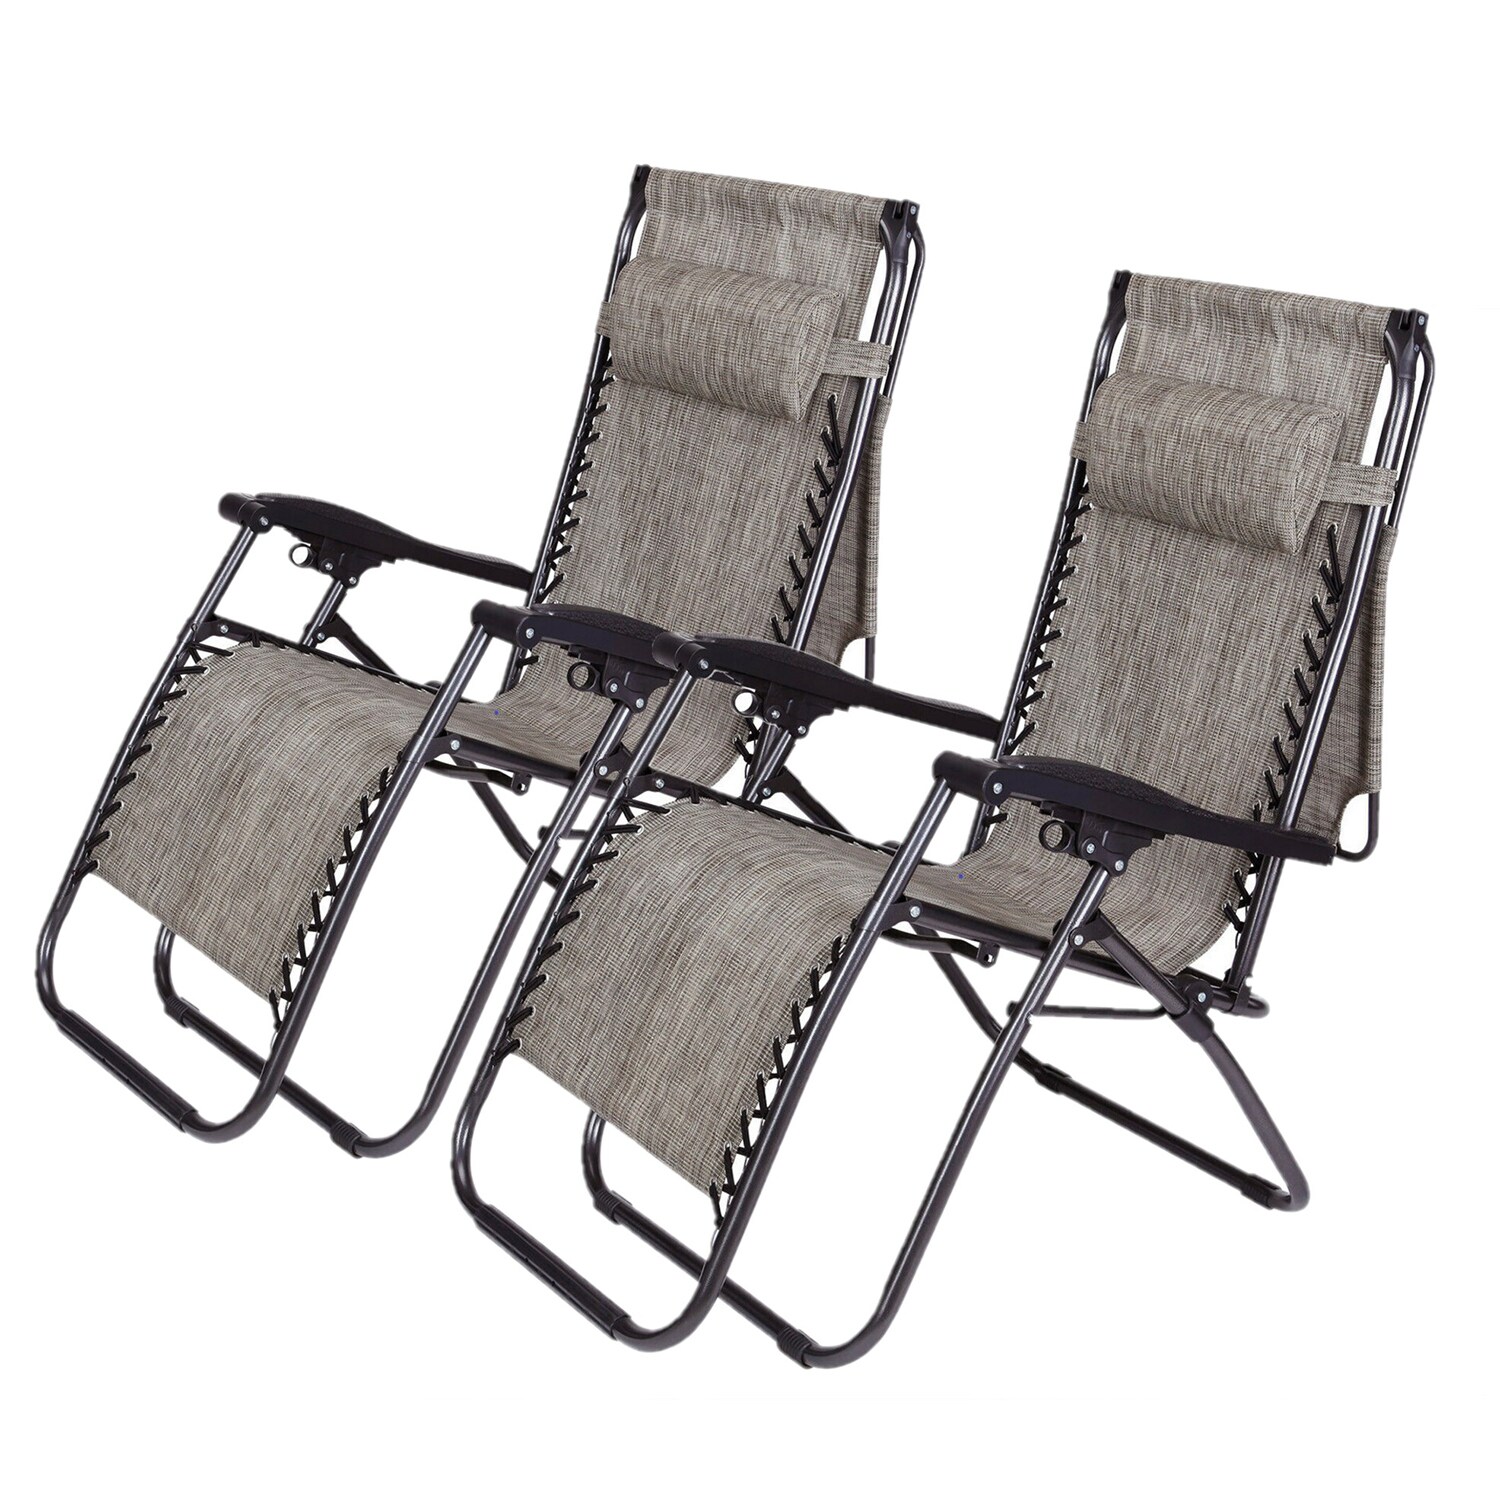 2 Zero Gravity Canopy Reclining Chairs Sun Beach Camping Folding Loung W/Trays 